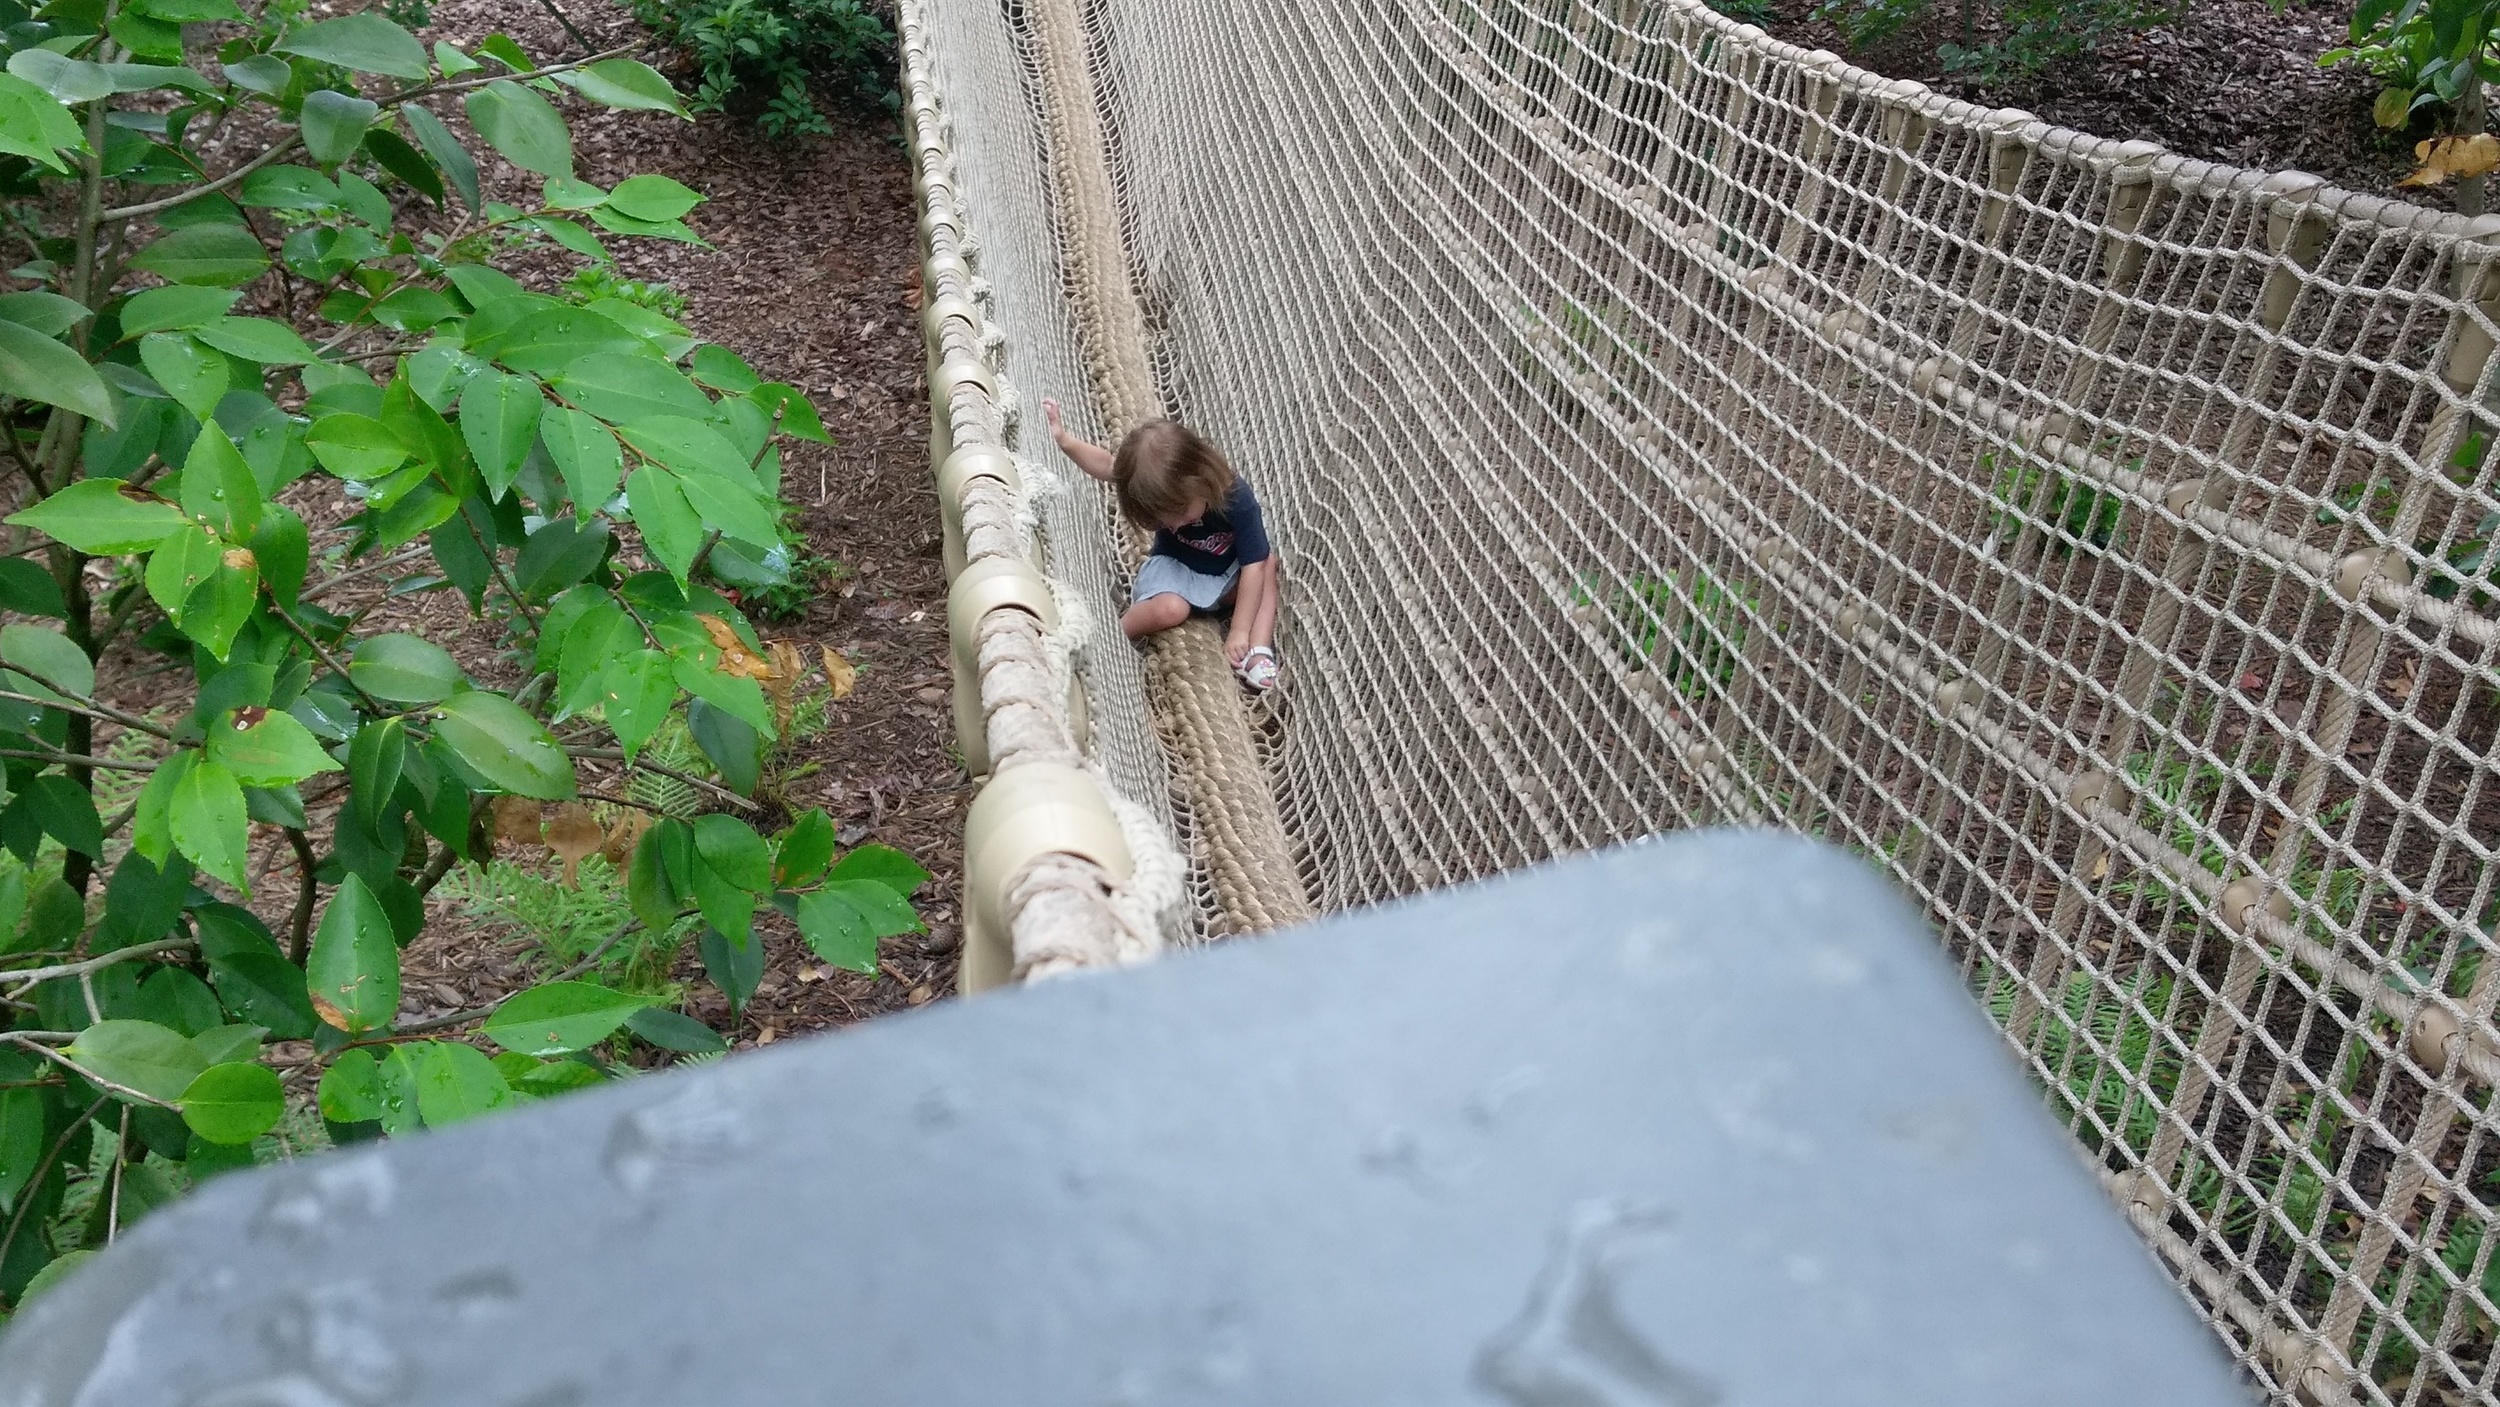 Cece on the rope bridge